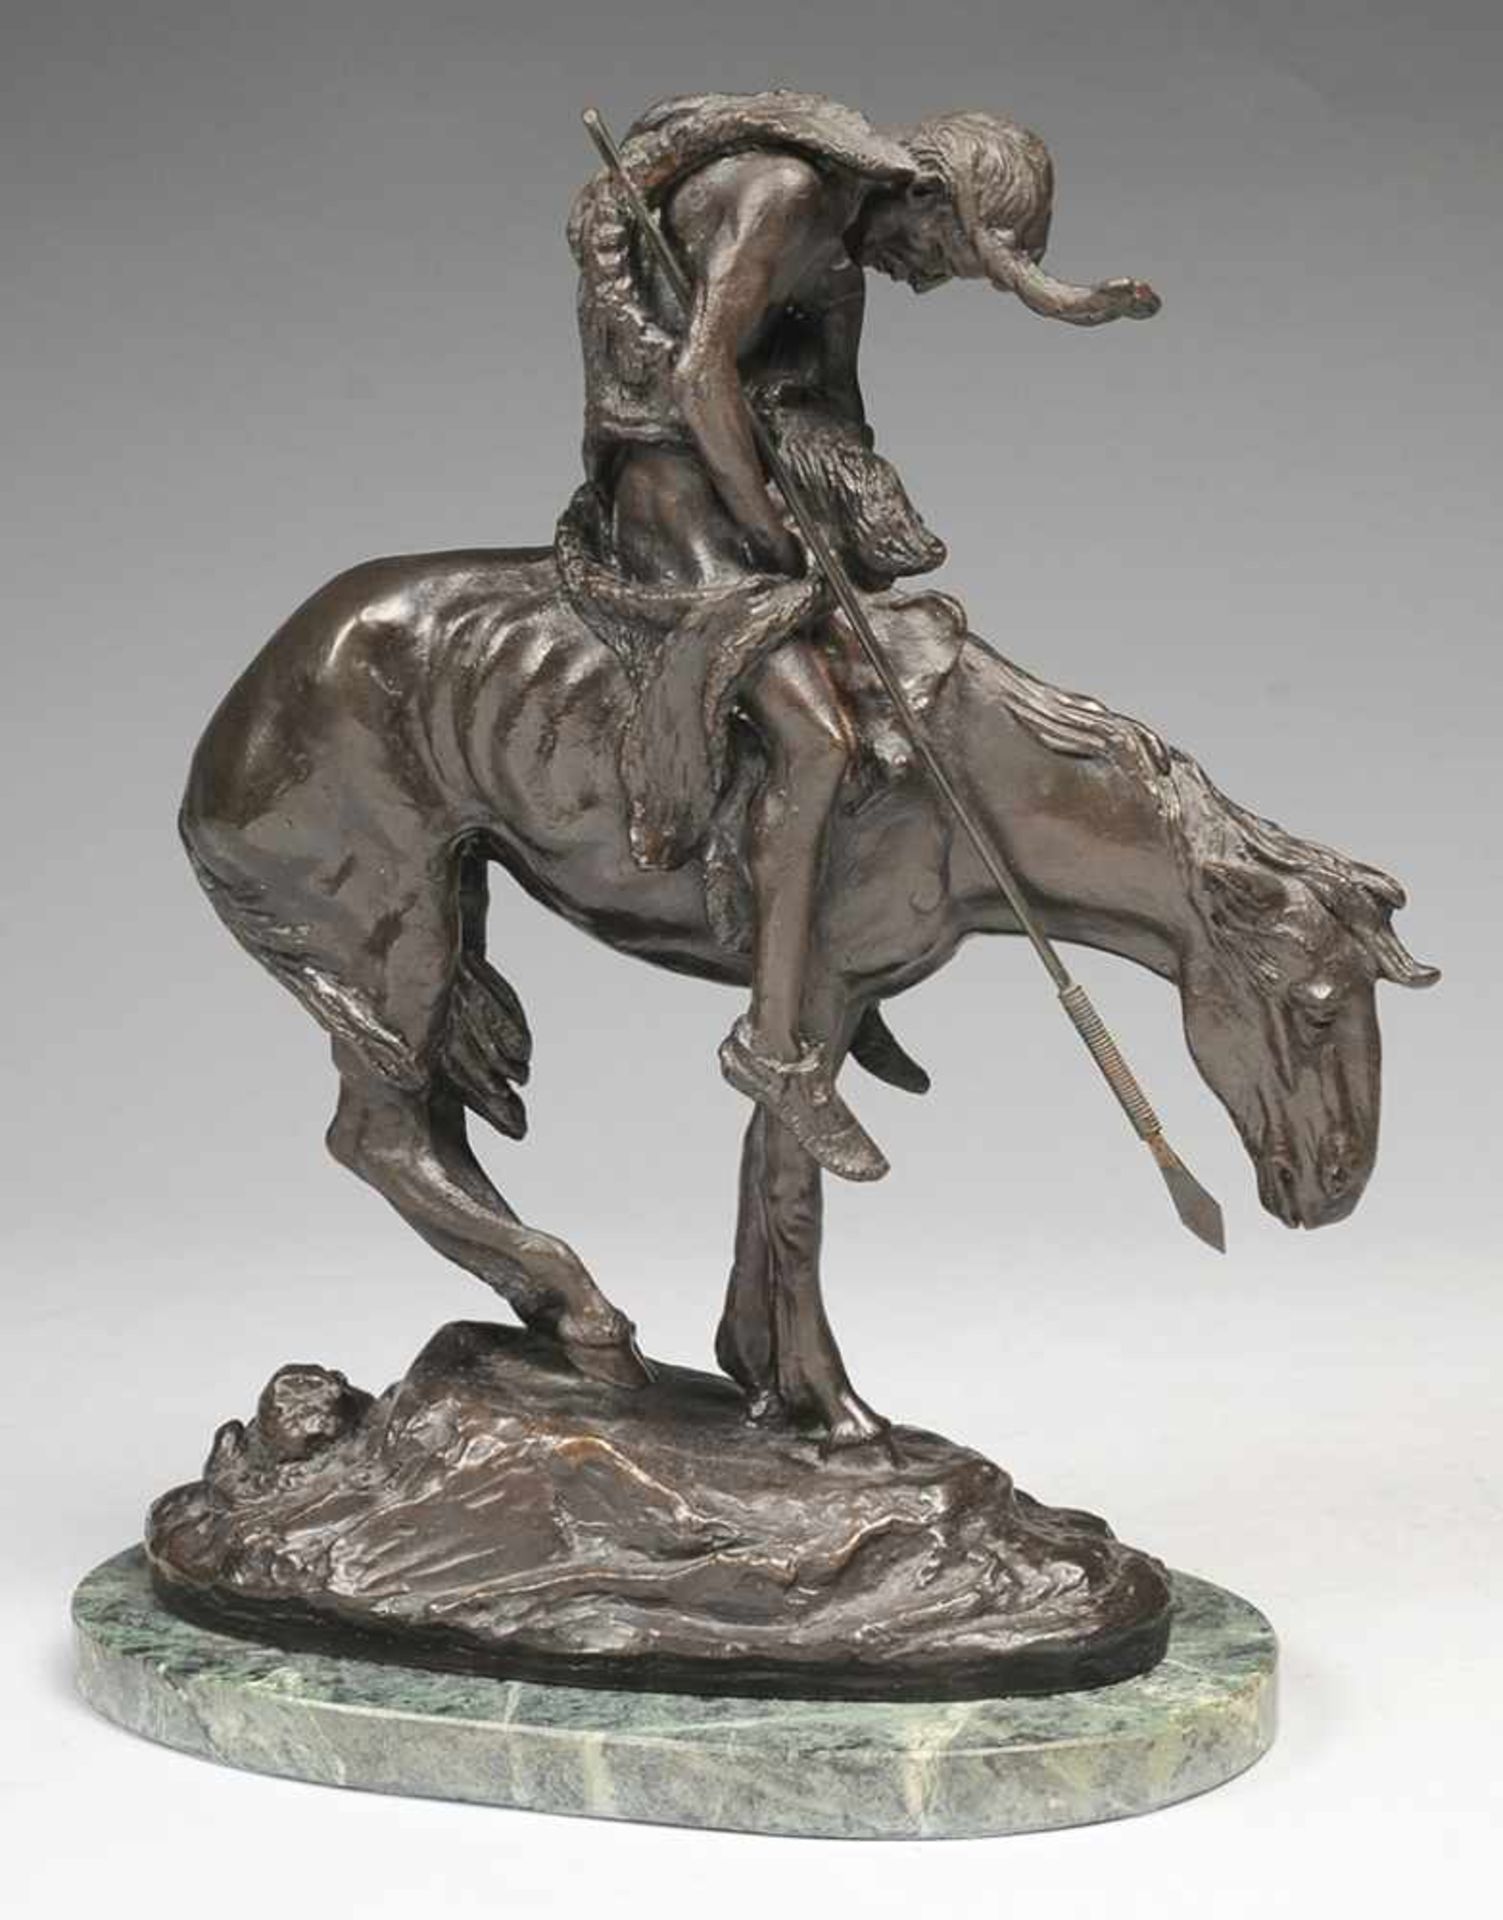 Fraser, James Earle (1876 Winona - 1953 Westport) Bronze, patiniert. "End of the Trail". Über ovalem